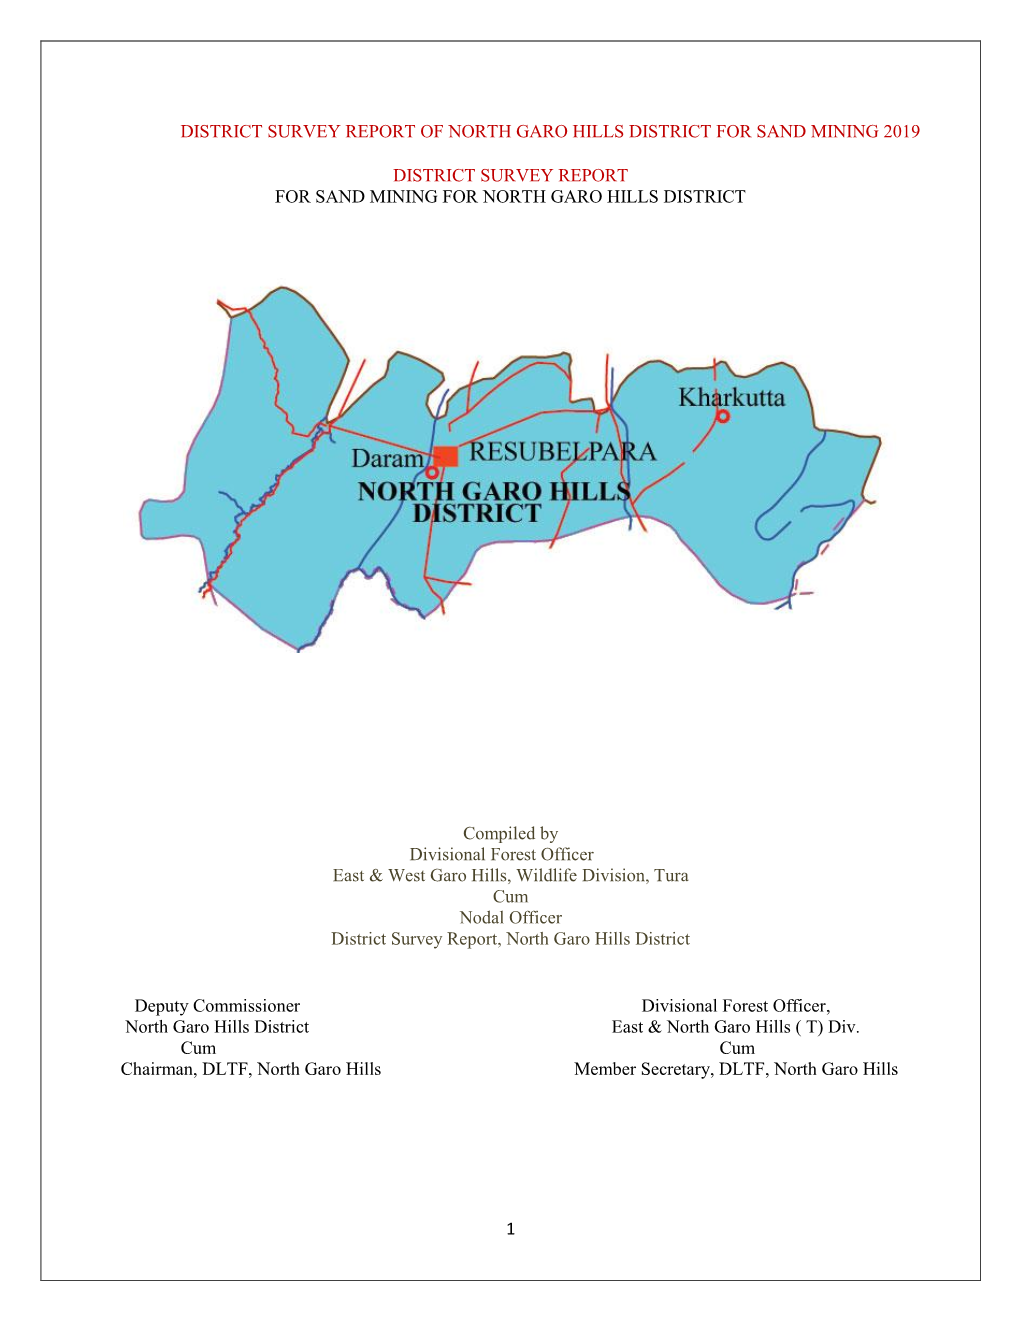 1 District Survey Report of North Garo Hills District